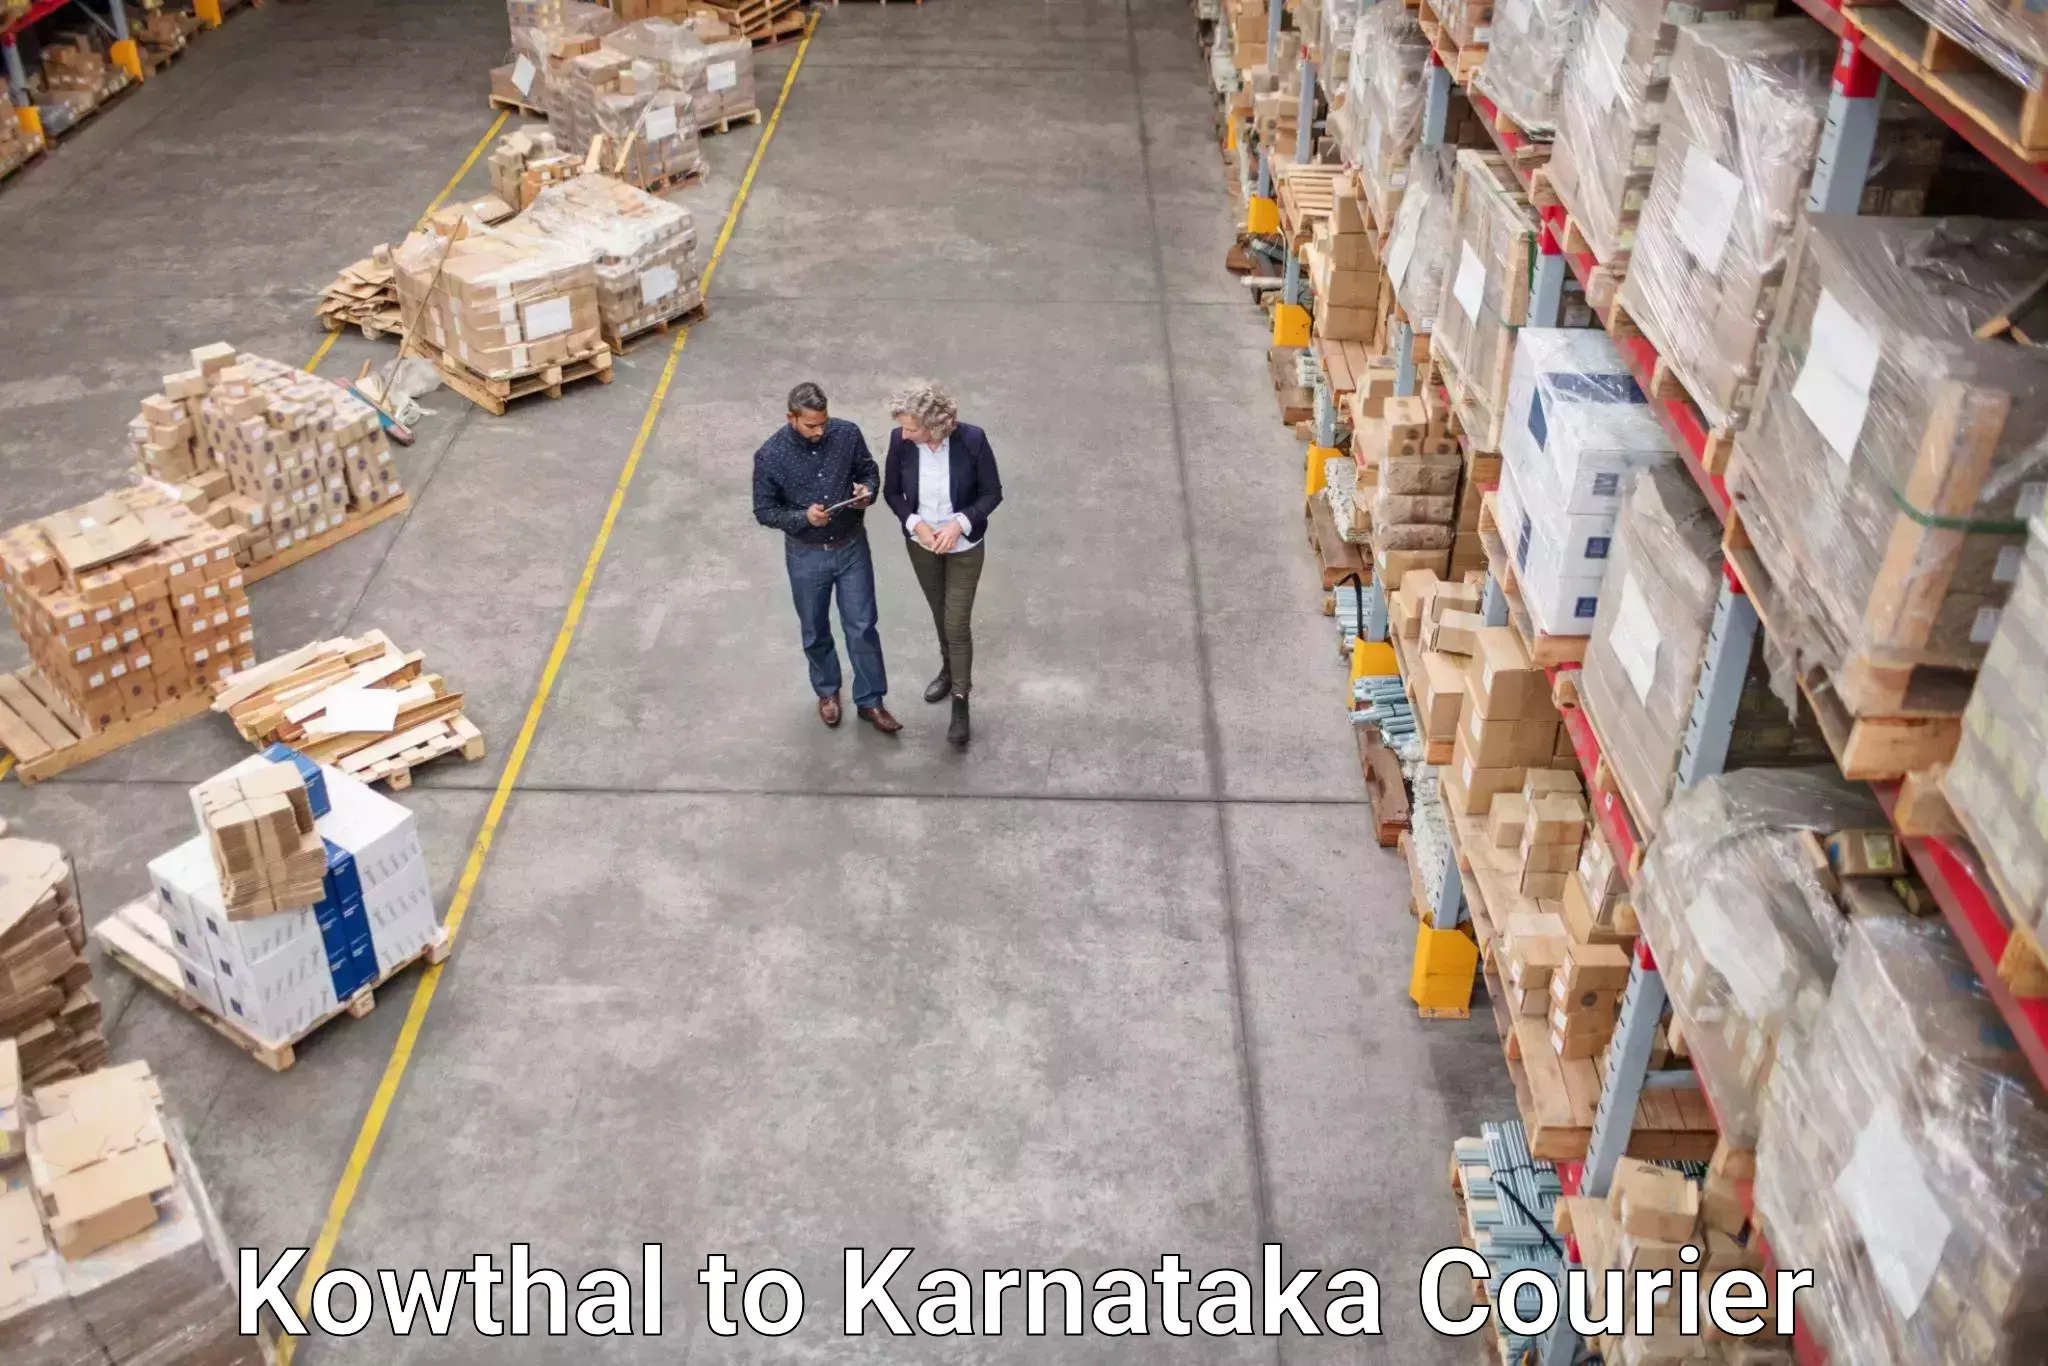 Package delivery network Kowthal to Karnataka